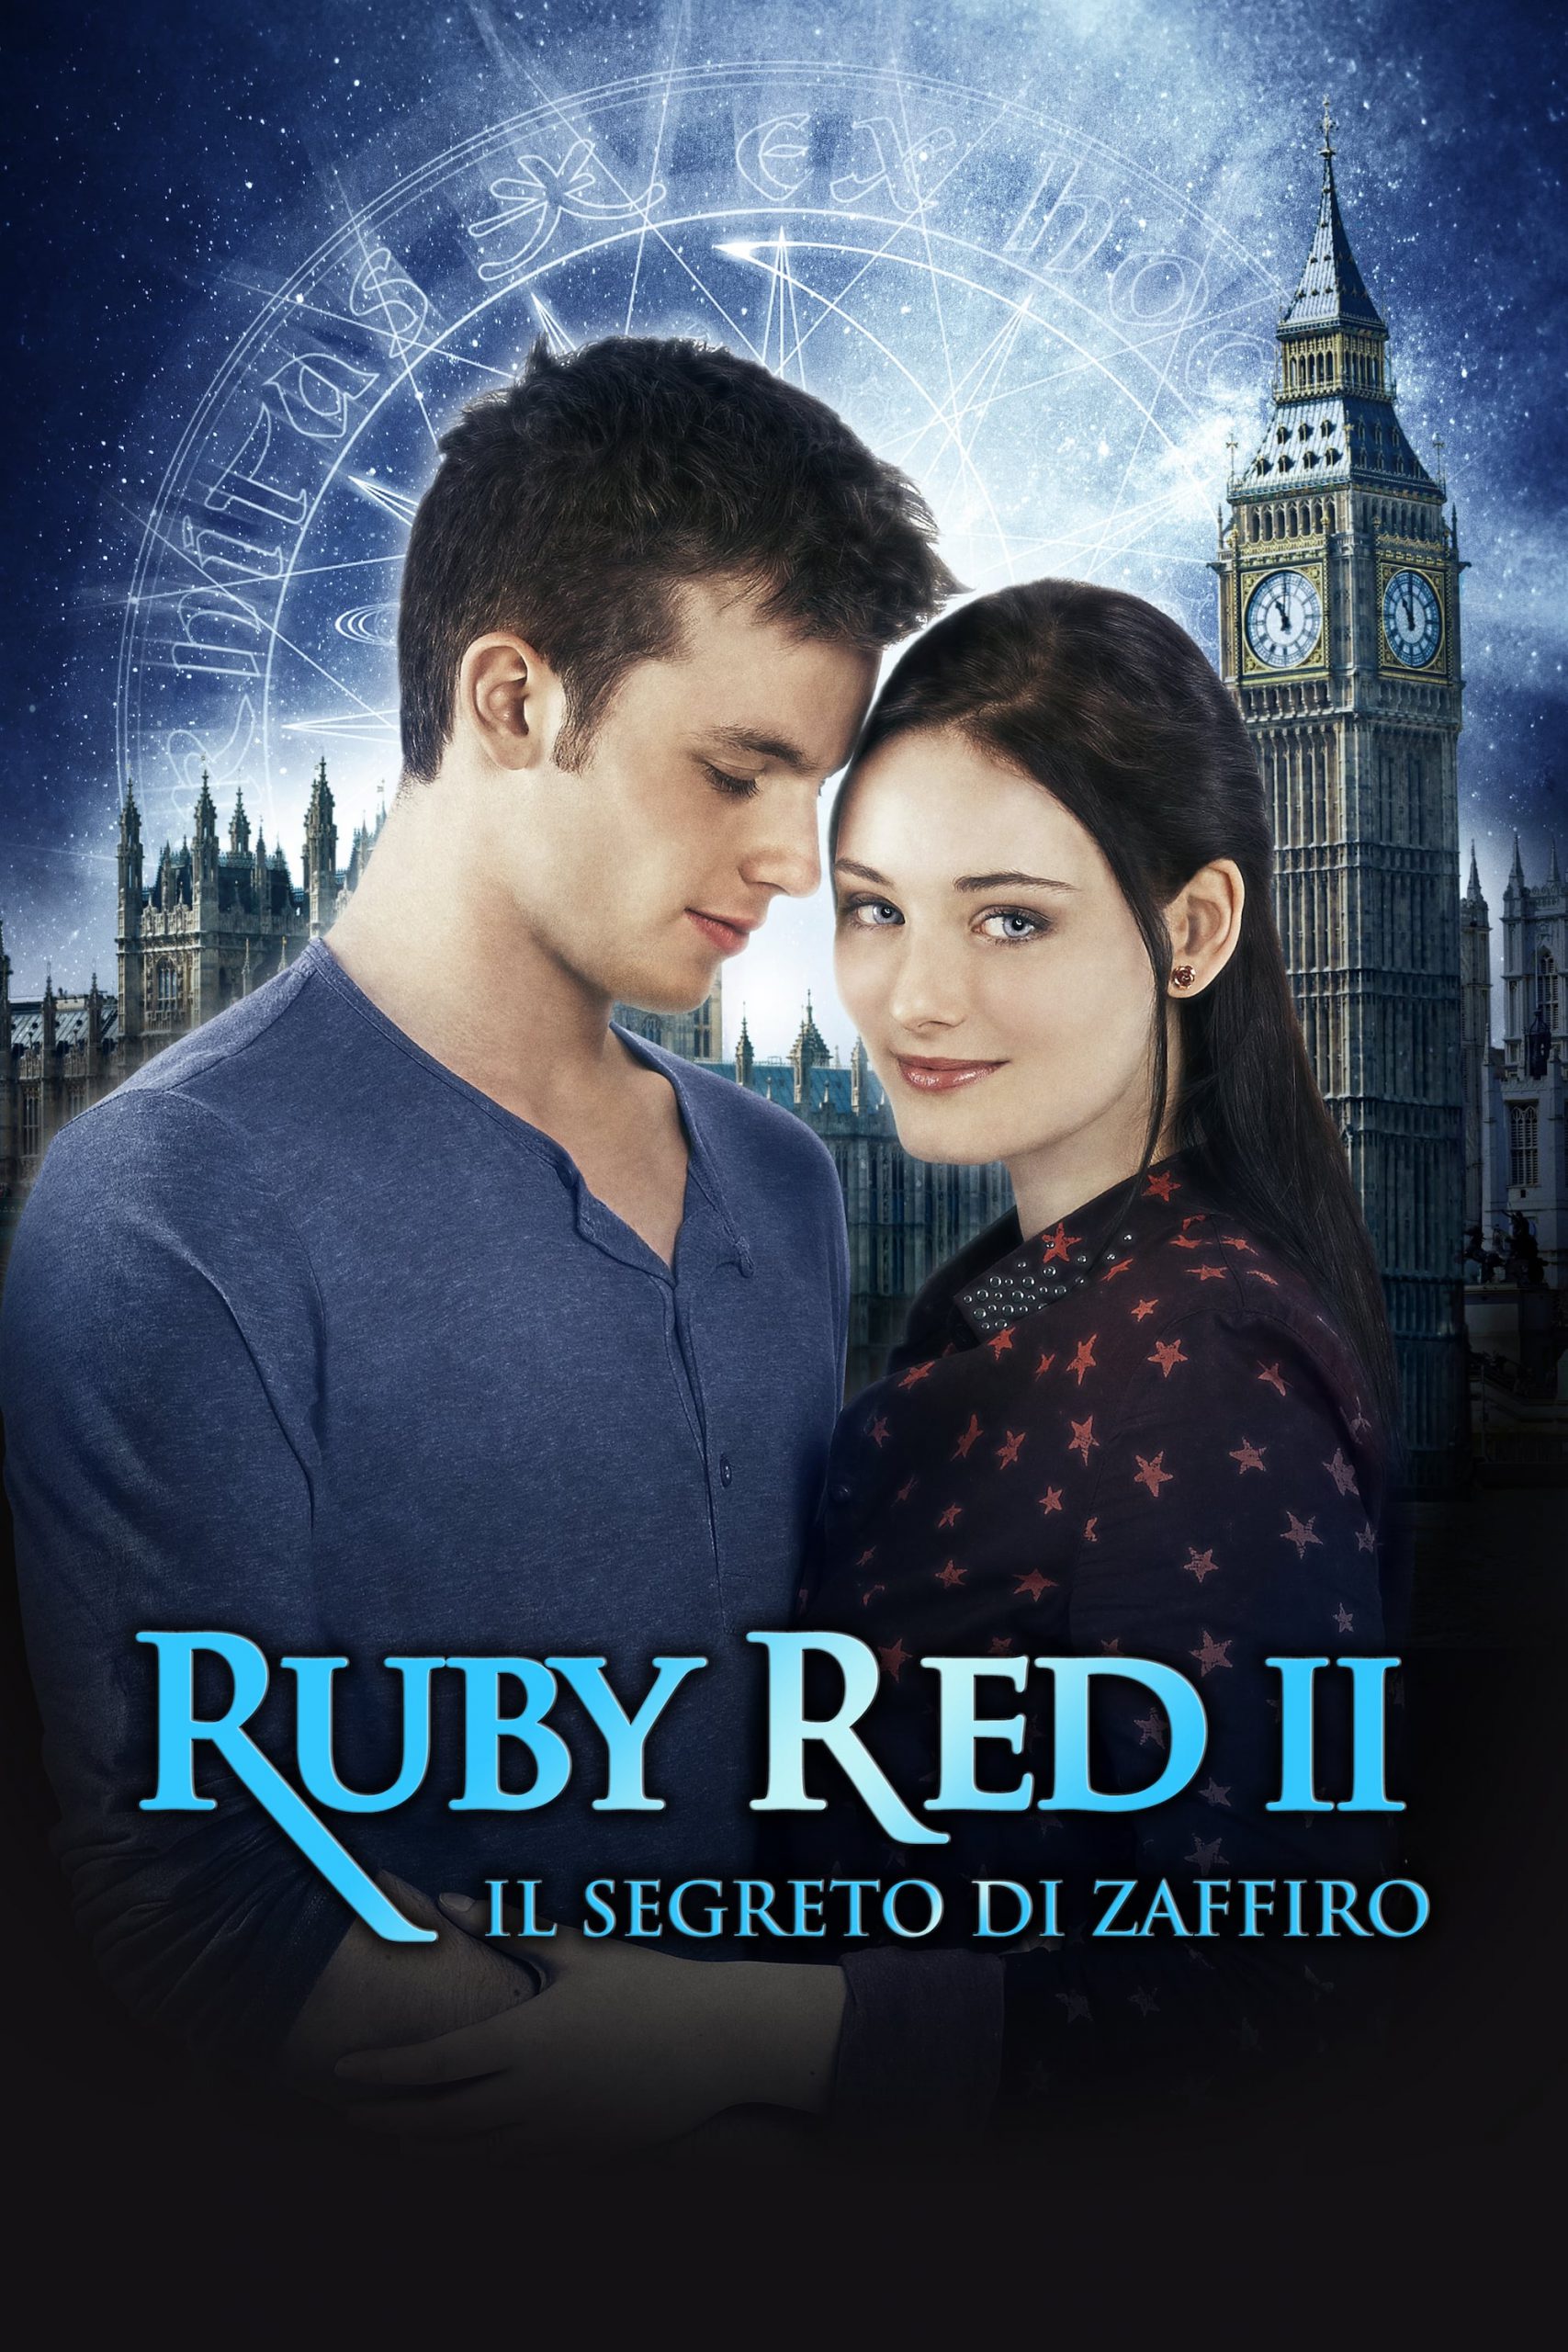 Ruby Red II – Il segreto di Zaffiro [HD] (2014)